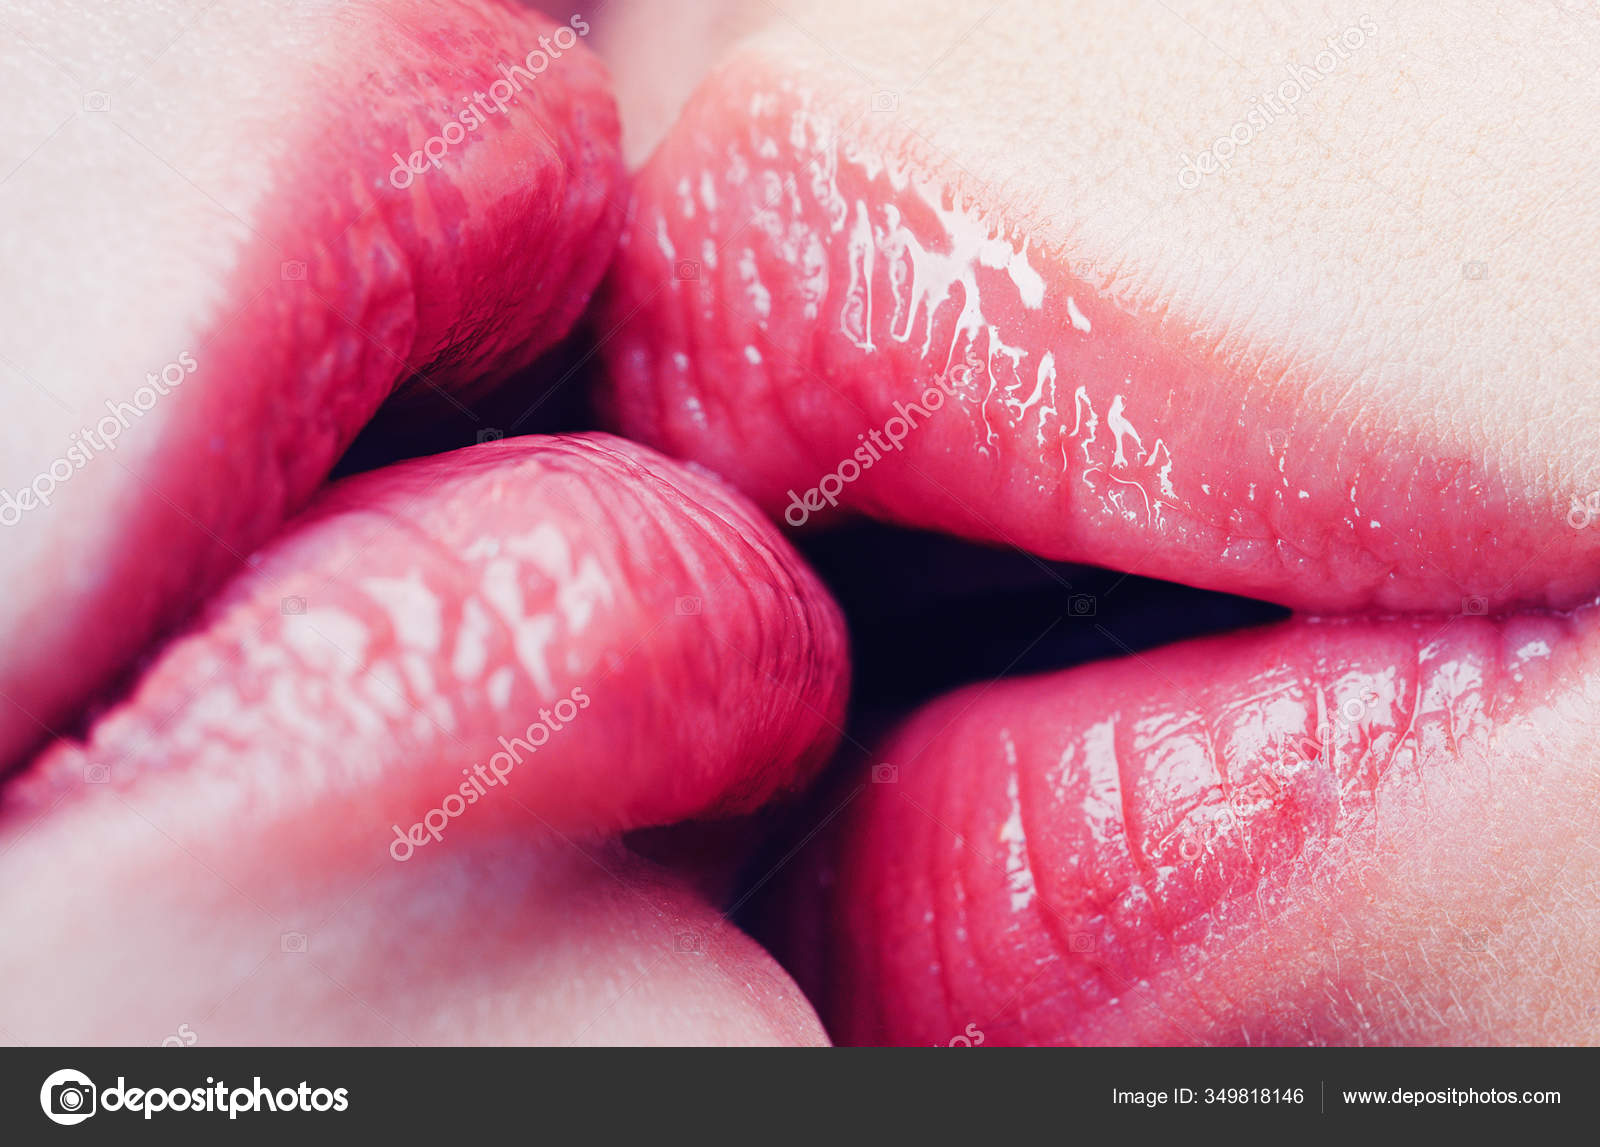 Lesbian kiss. Sensual wet female lips kissing. Lesbian pleasures. Oral pleasure. Couple girls kissing lips close up. Sensual touch kissing sexual activity. Hot foreplay